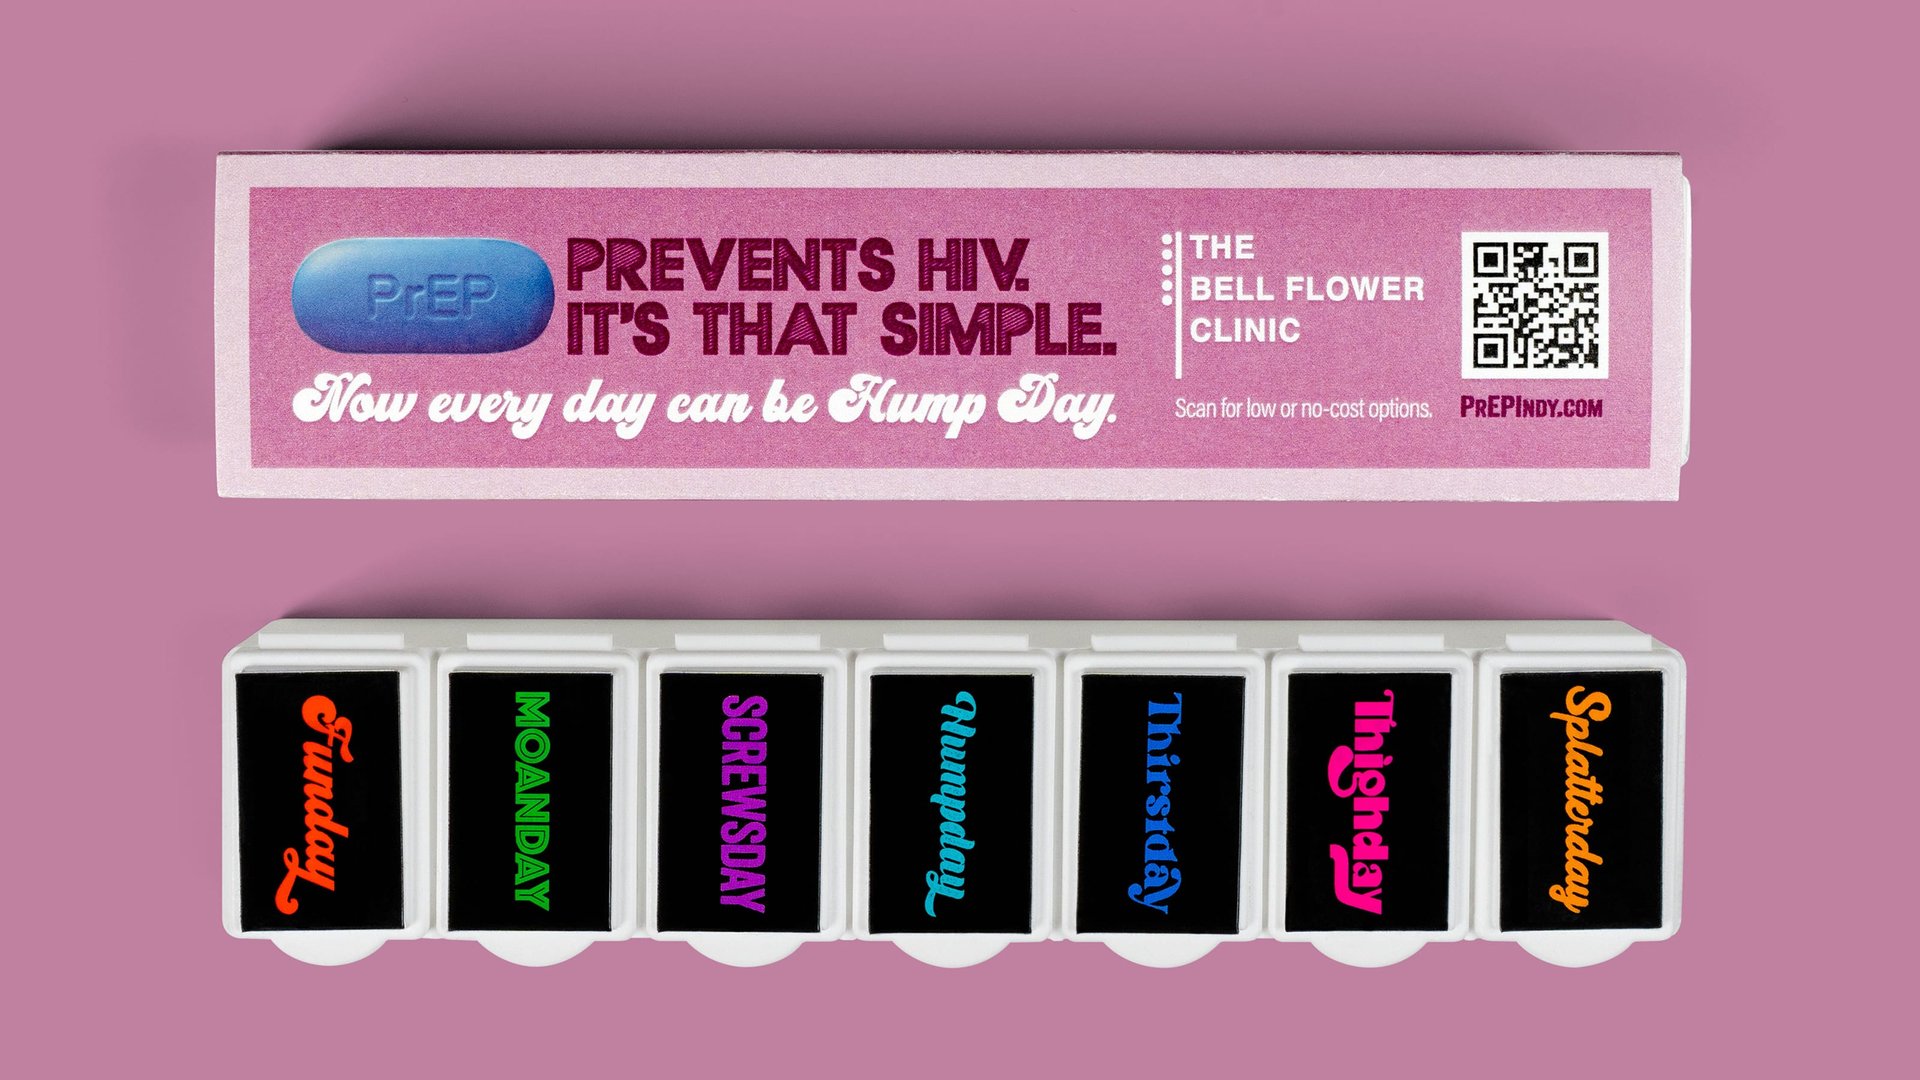 HIV Prevention Campaign - 7 Day Pill Container